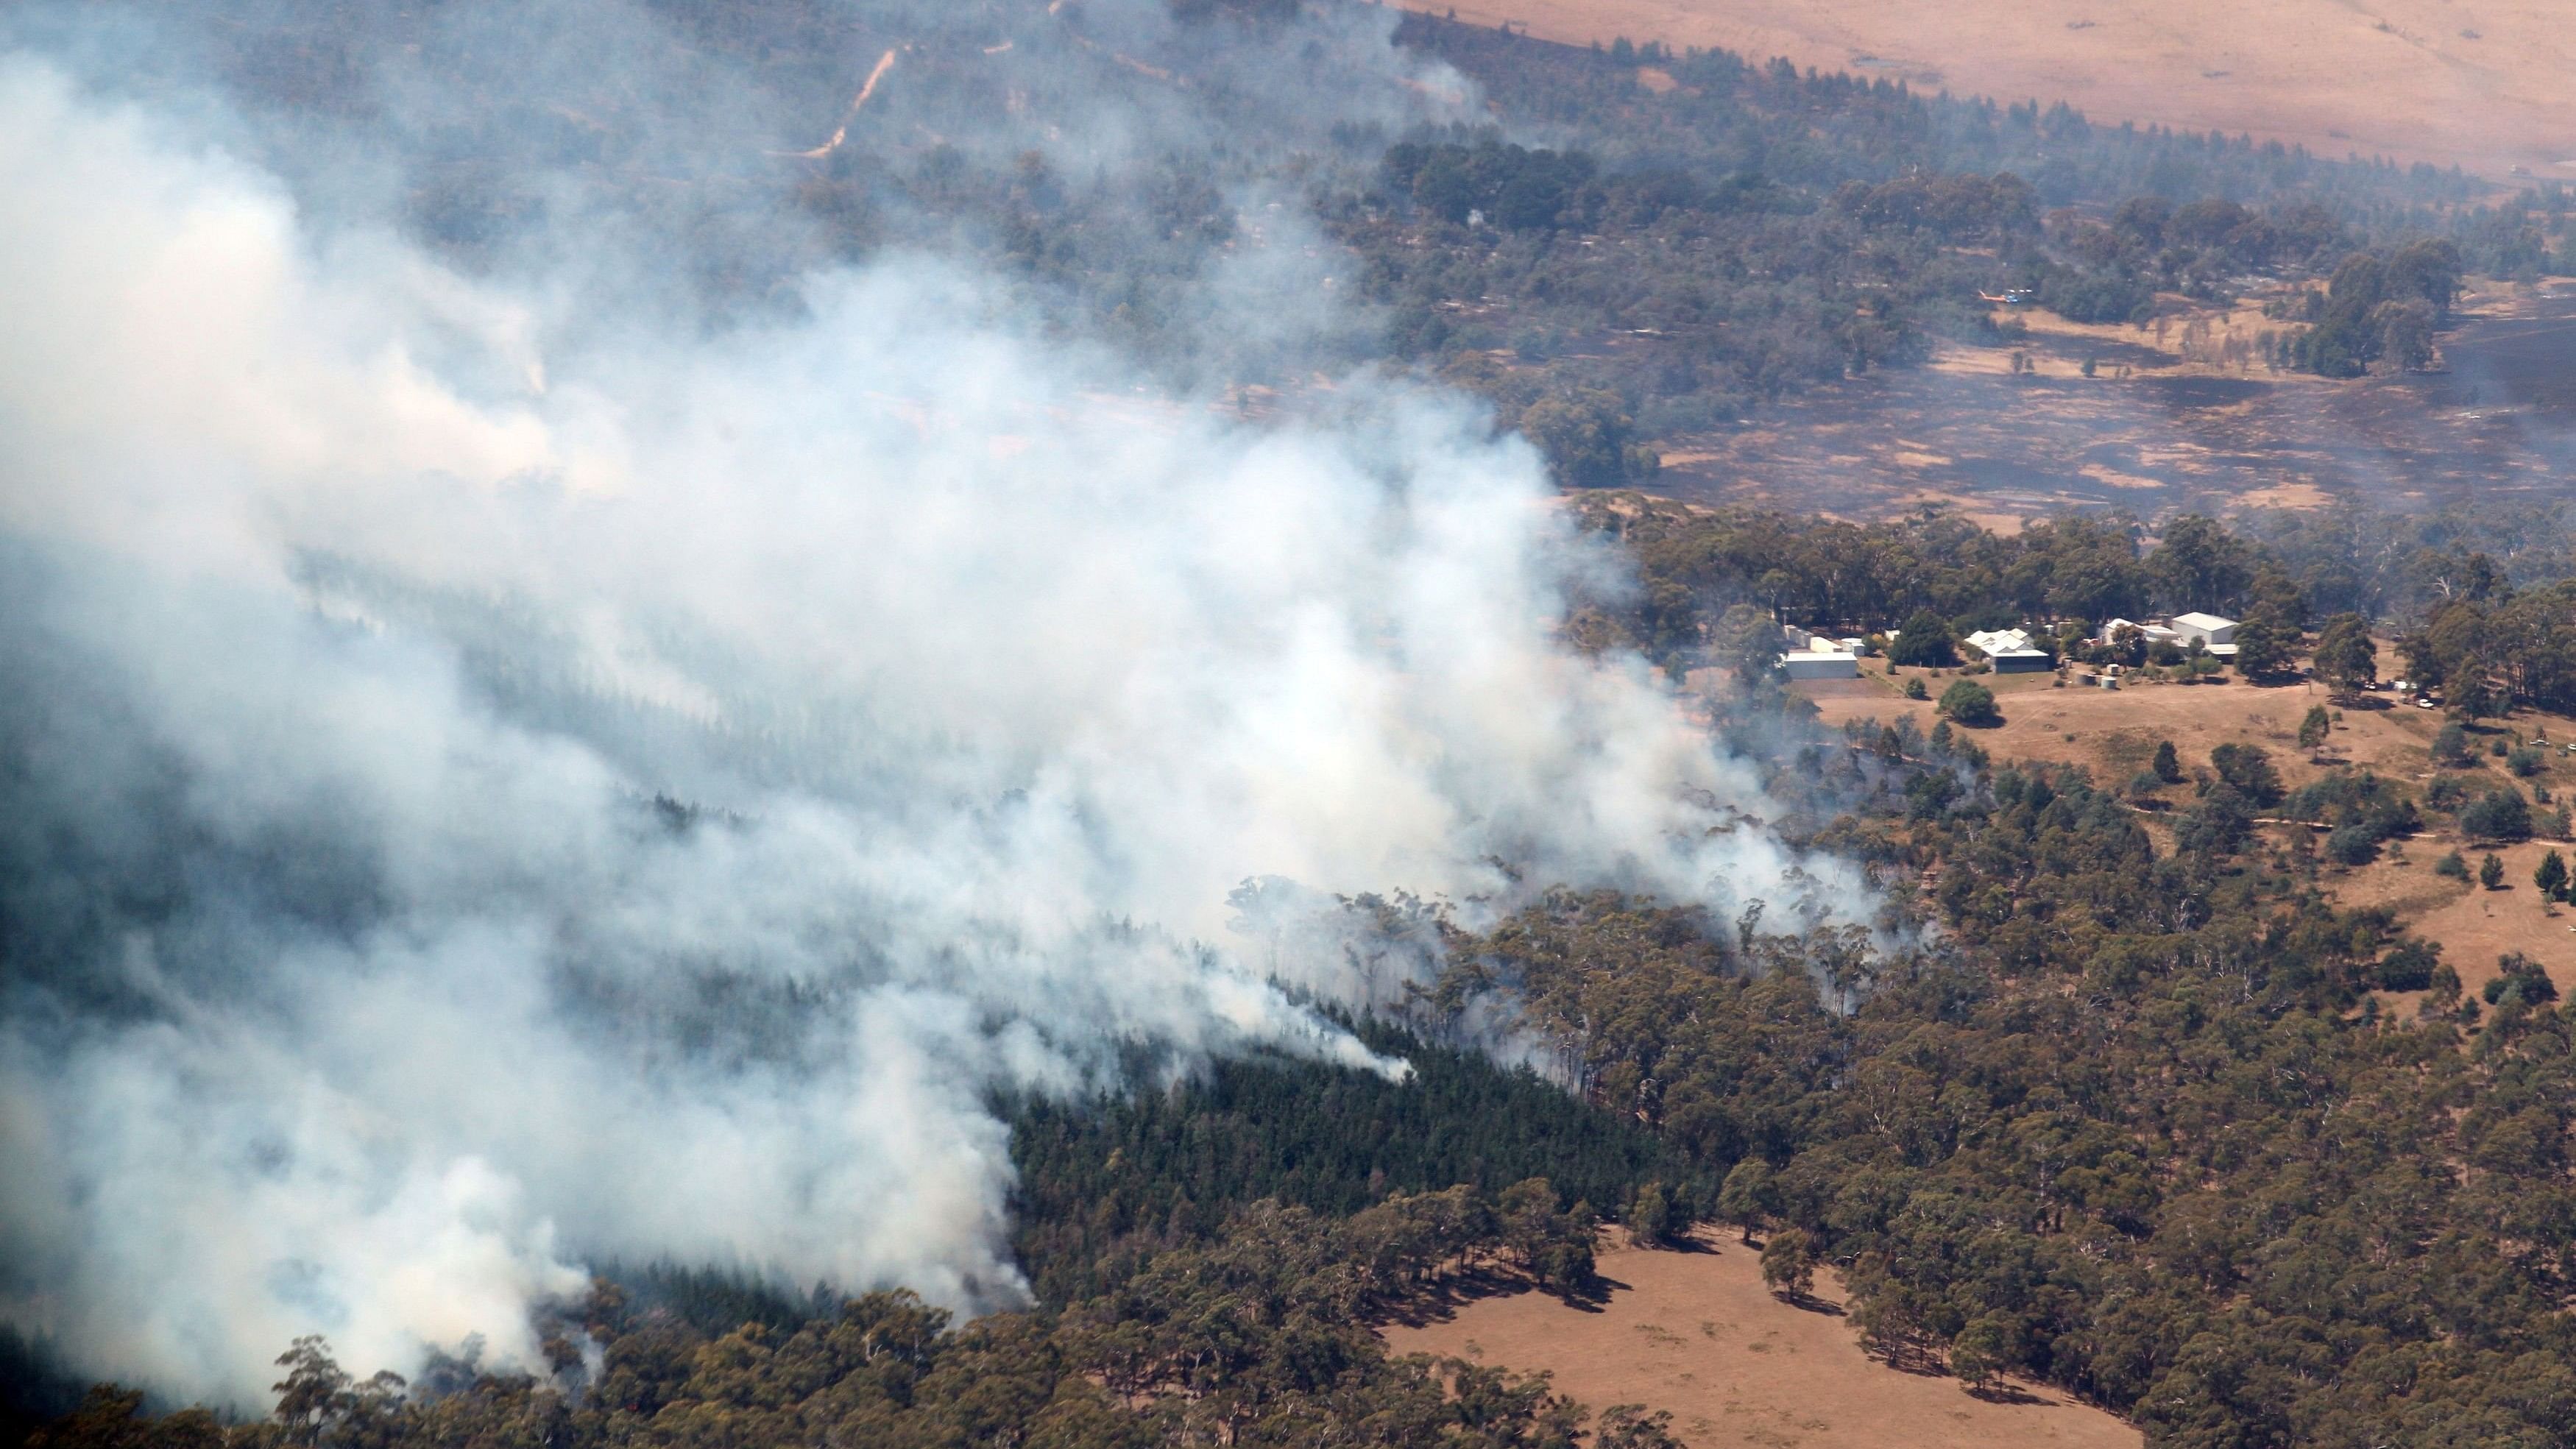 <div class="paragraphs"><p>Smoke from bushfires in Australia.</p></div>